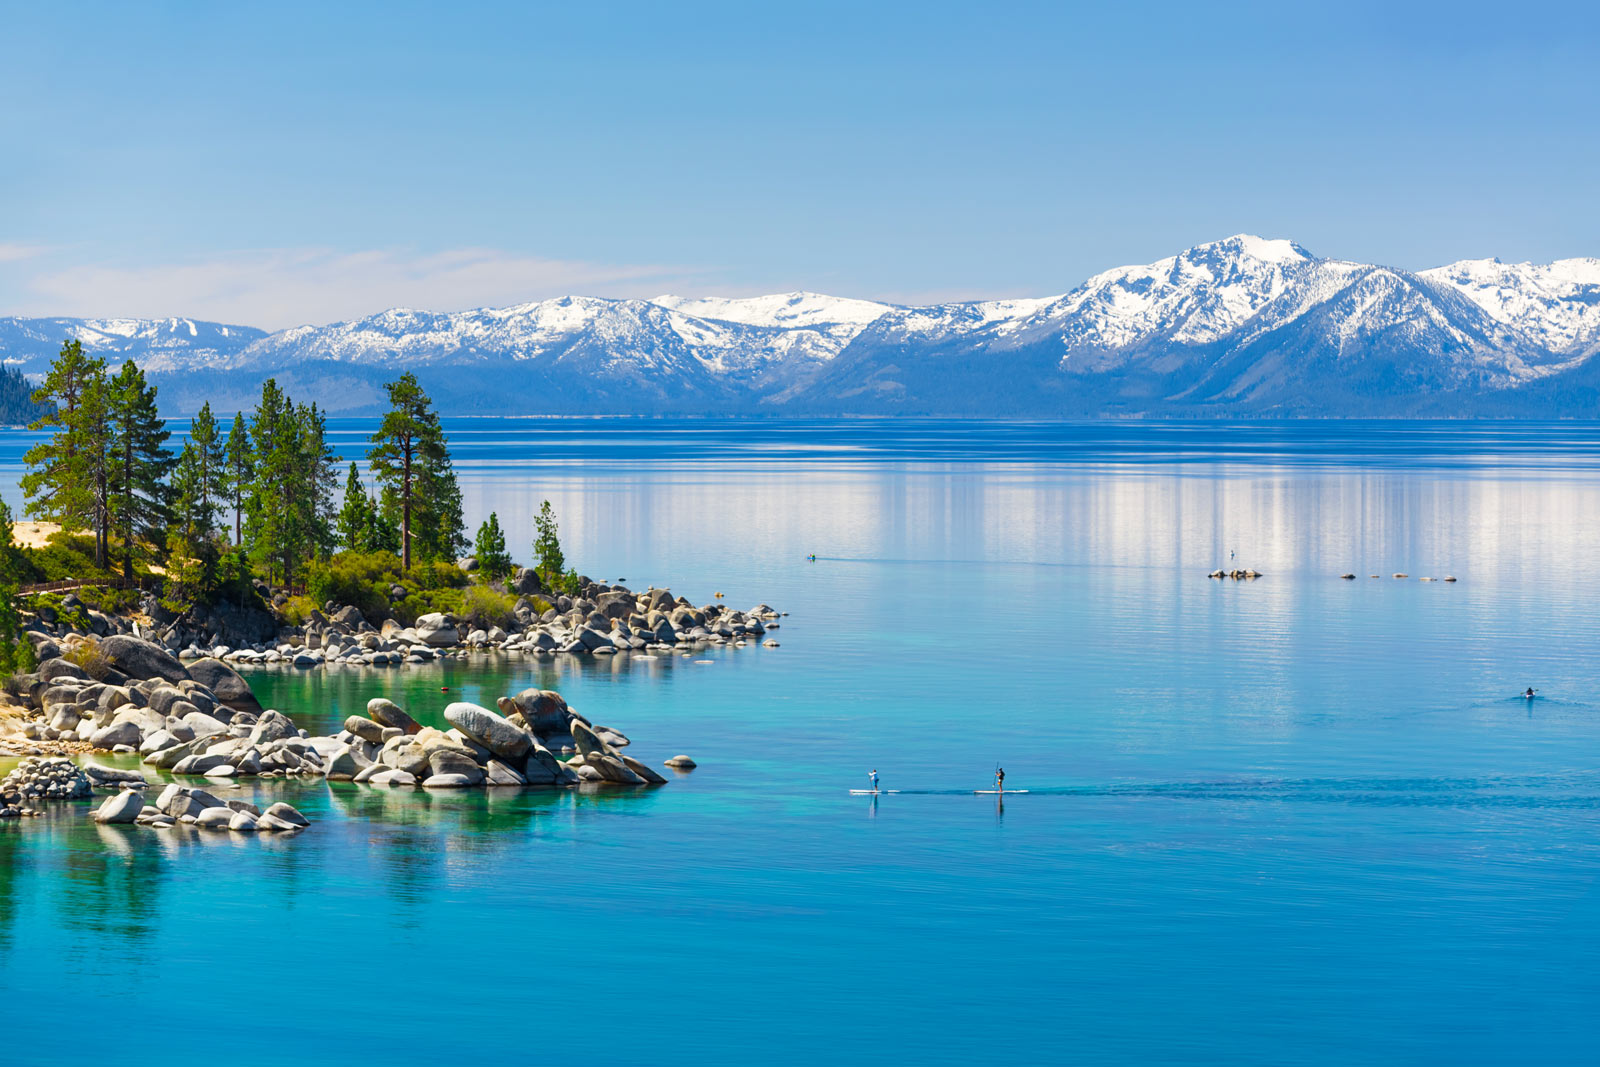 Best Things to do in Lake Tahoe